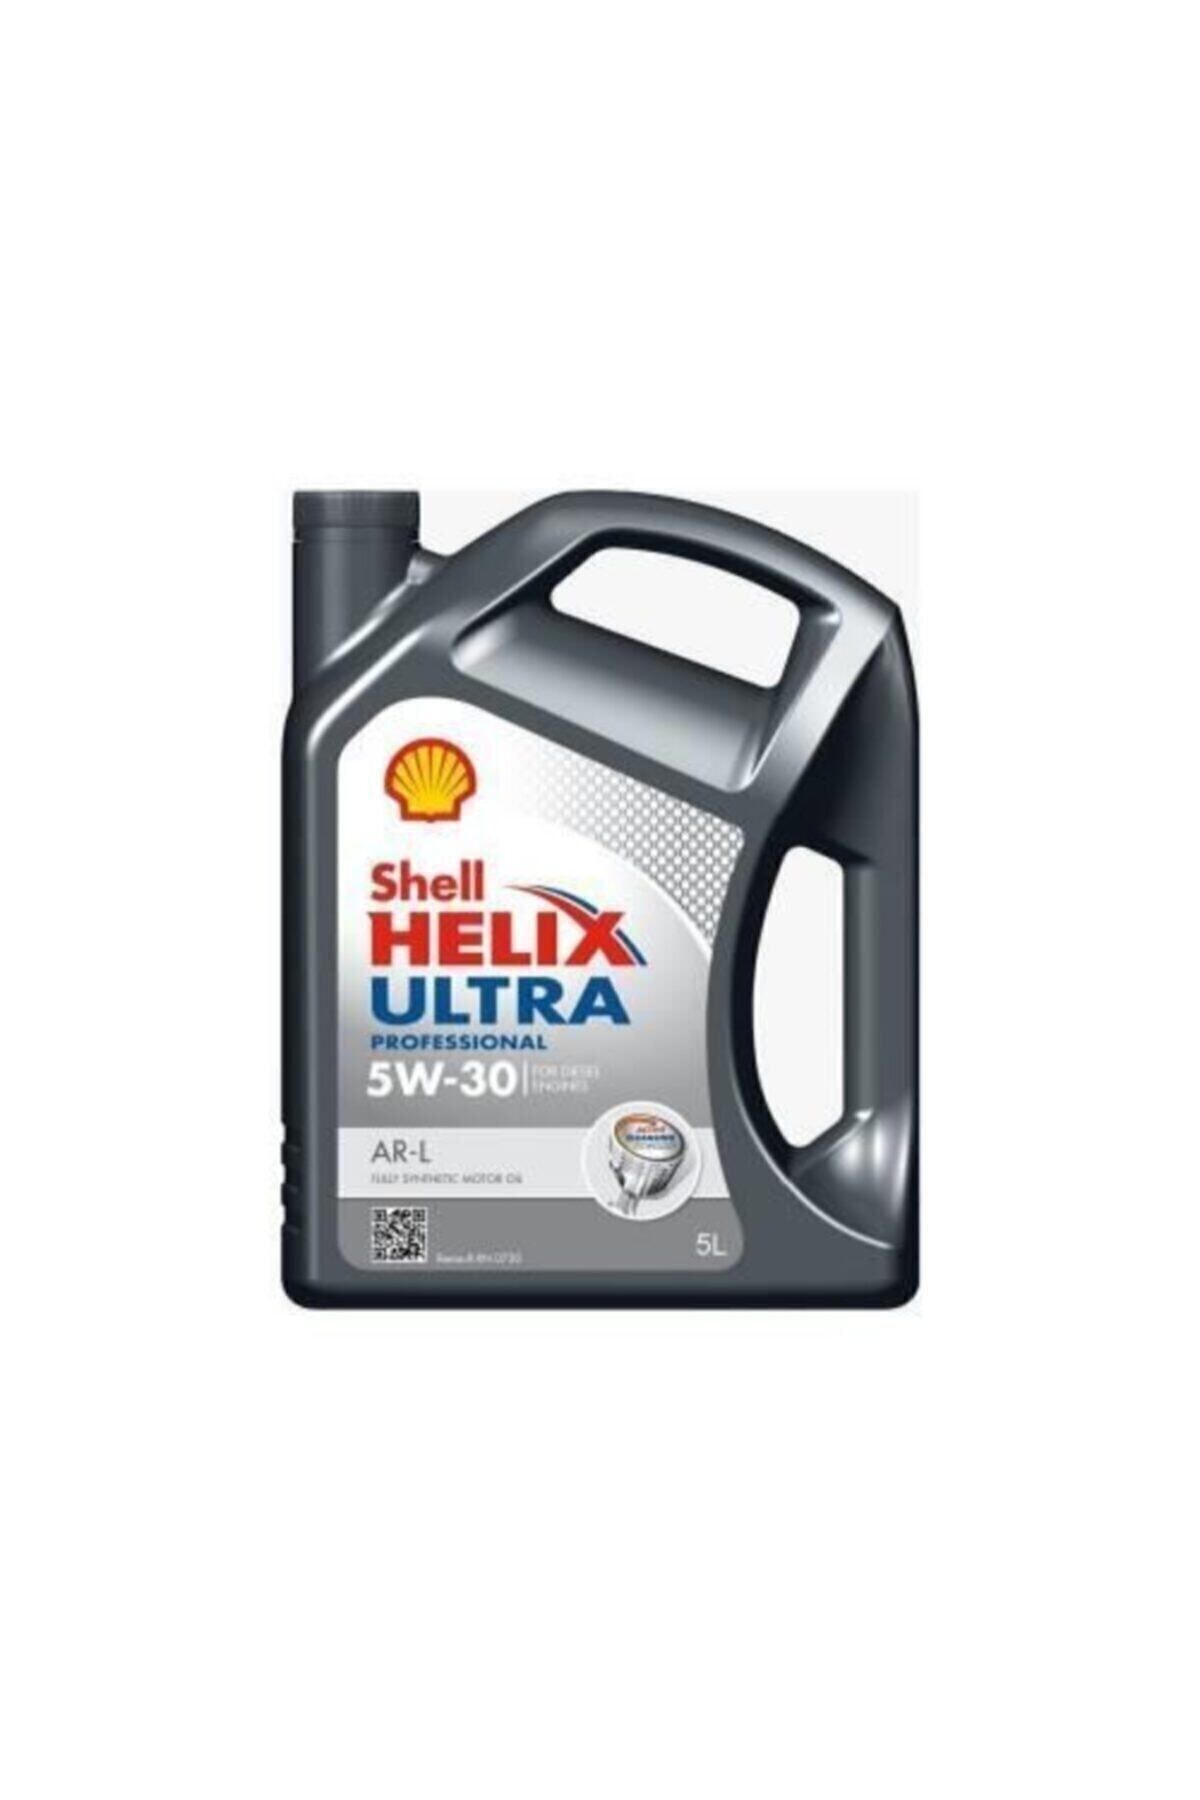 Shell Helix Ultra Pro Arl 5w-30 5lt Acea C4 (RENAULT ONAYLI) Ü/t:21